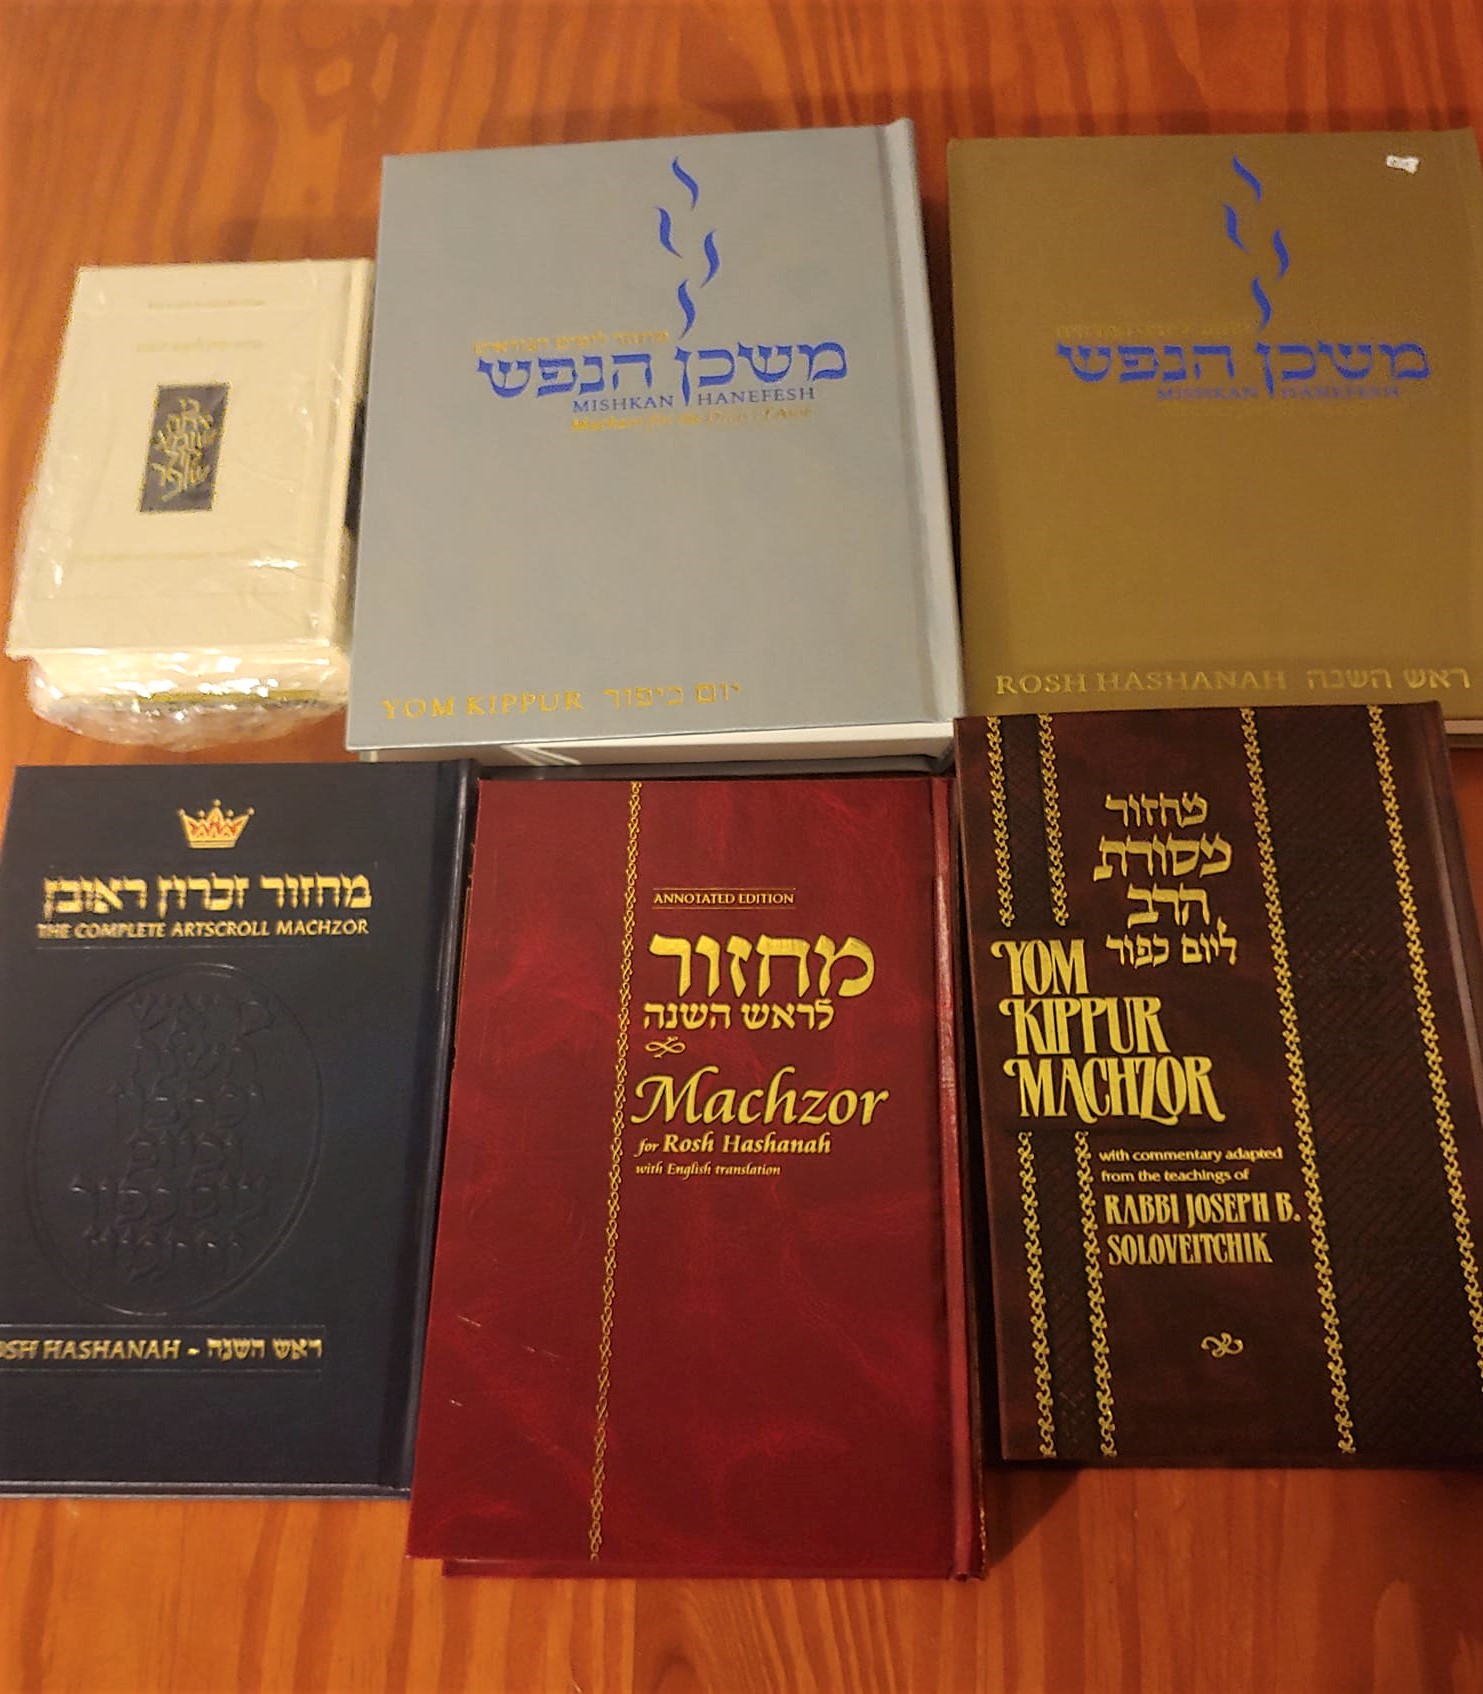 Prayerbooks at Pinsker’s Judaica in Pittsburgh. Source: Facebook.